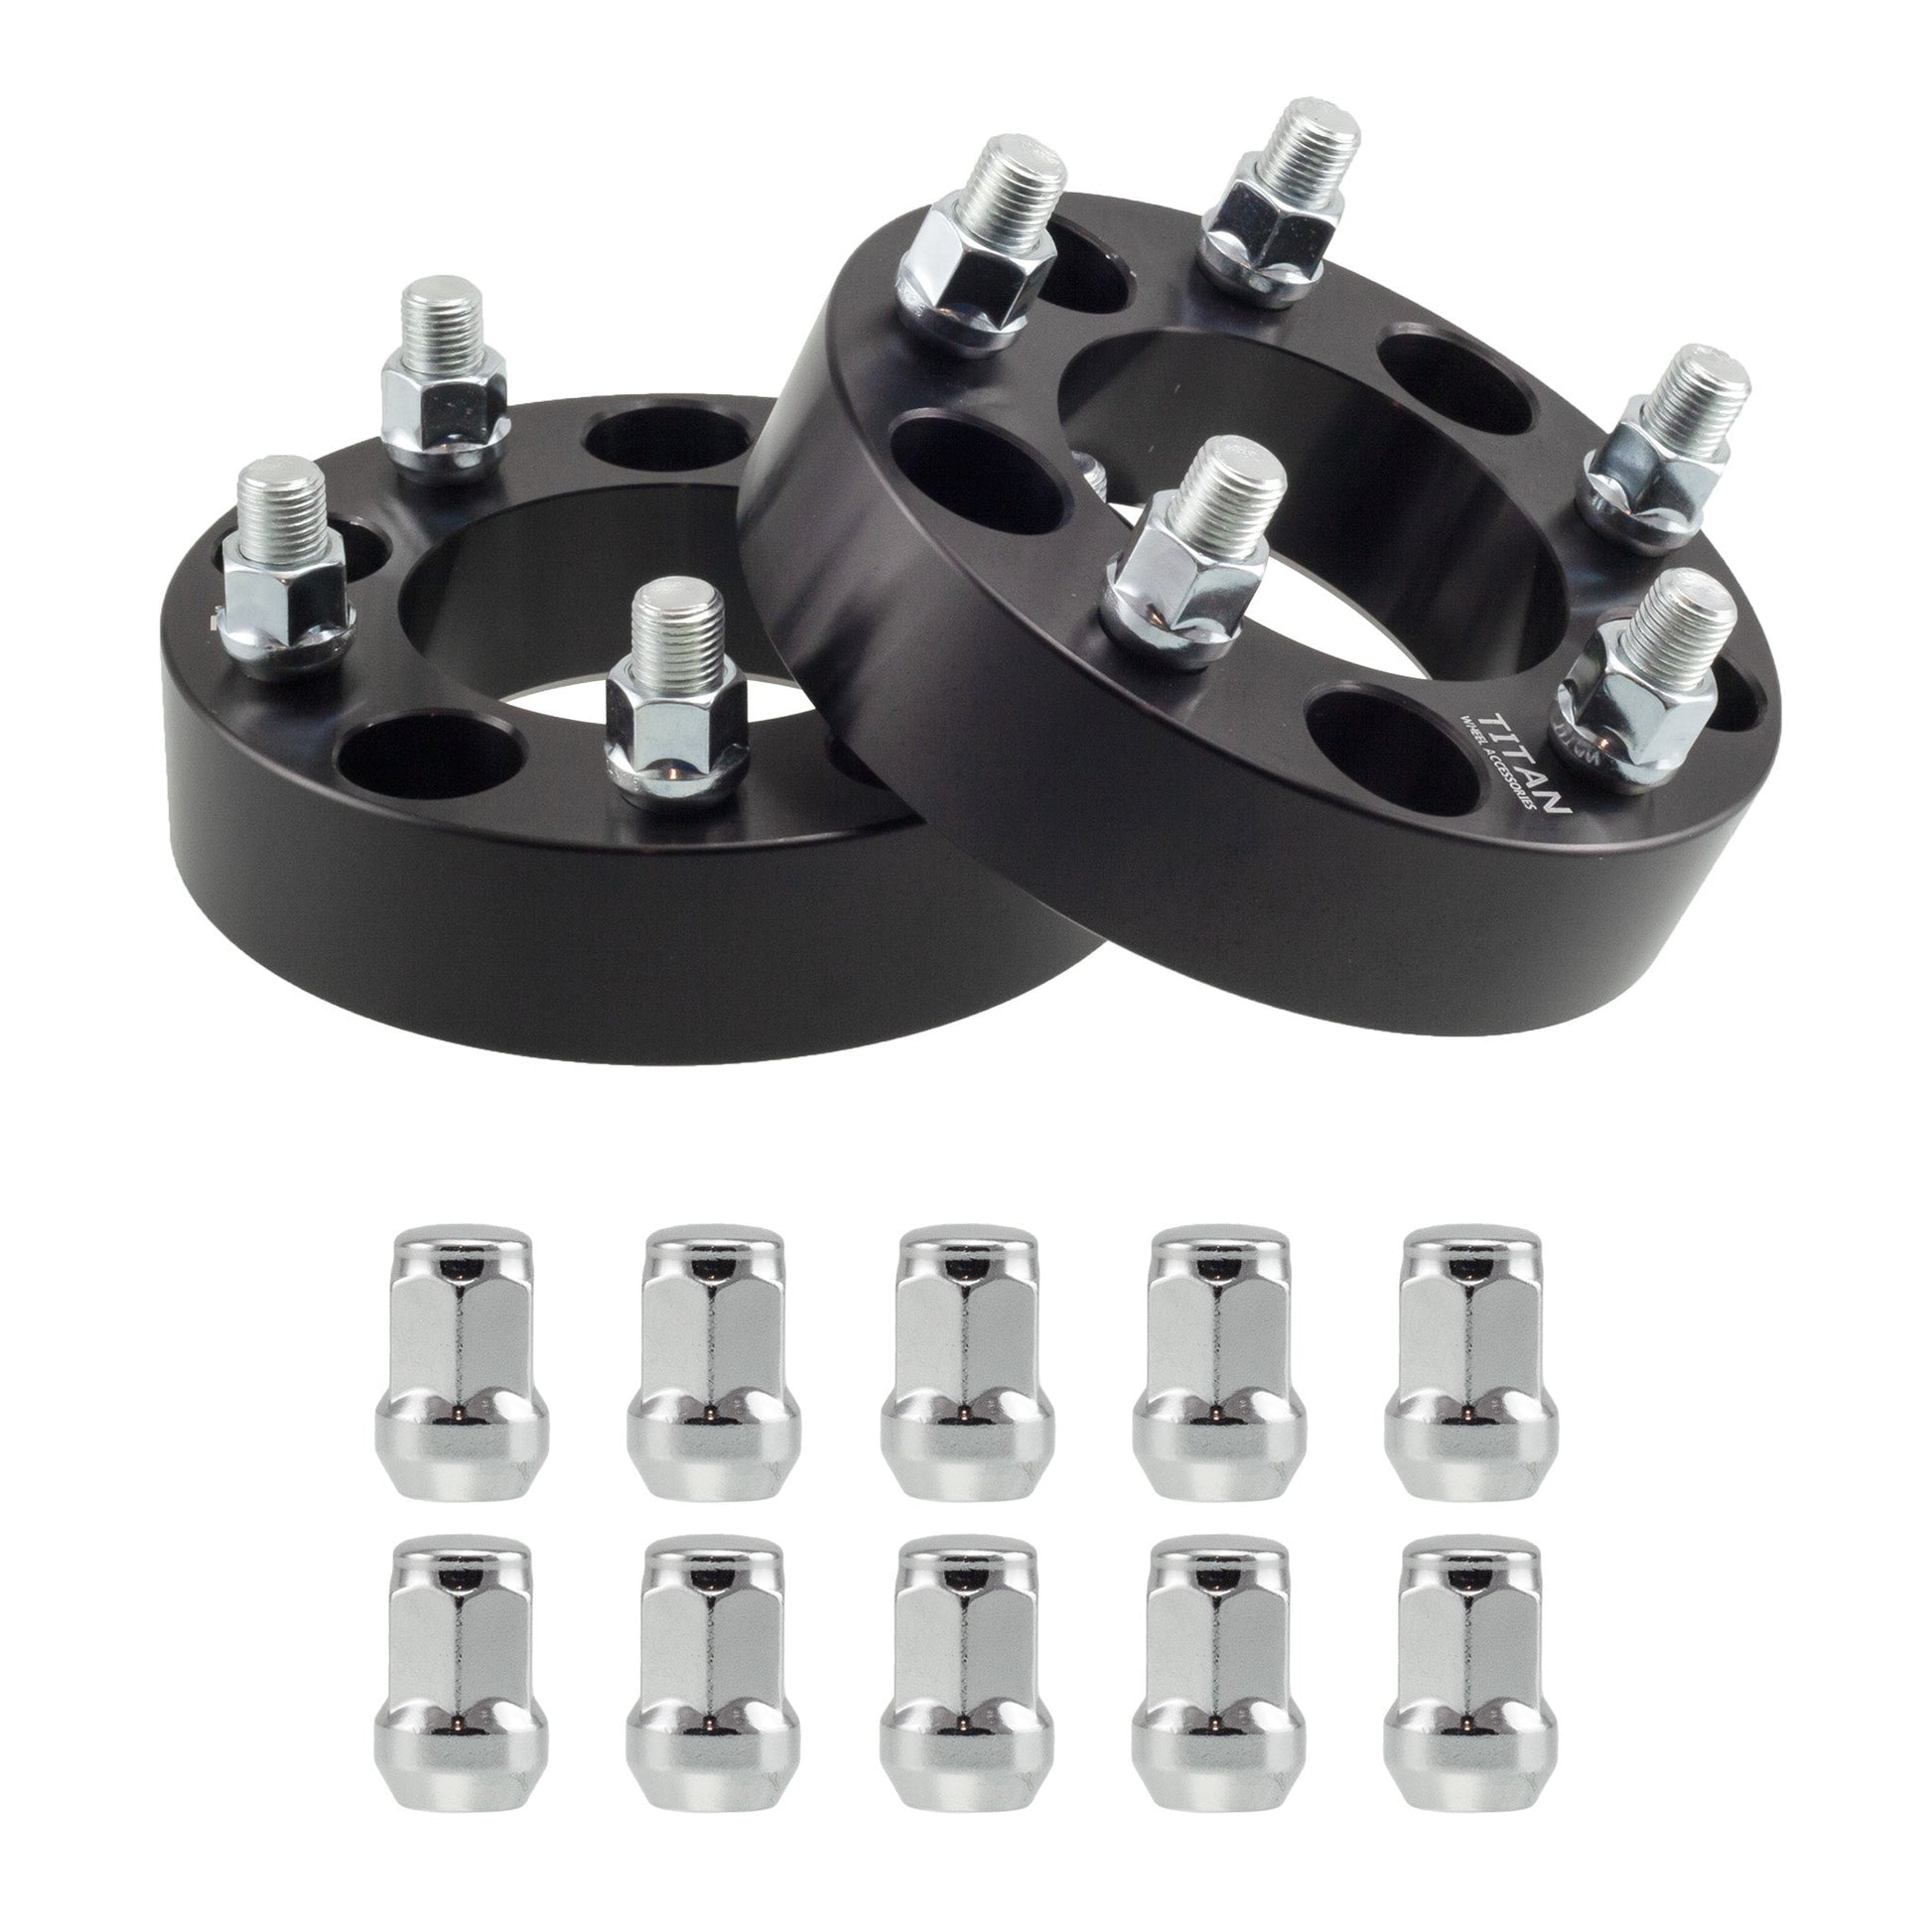 25mm (1") Titan Wheel Spacers for Nissan Altima 350Z 370Z Infiniti Q50 G35 G37 | 5x114.3 | 12x1.25 Studs | Titan Wheel Accessories